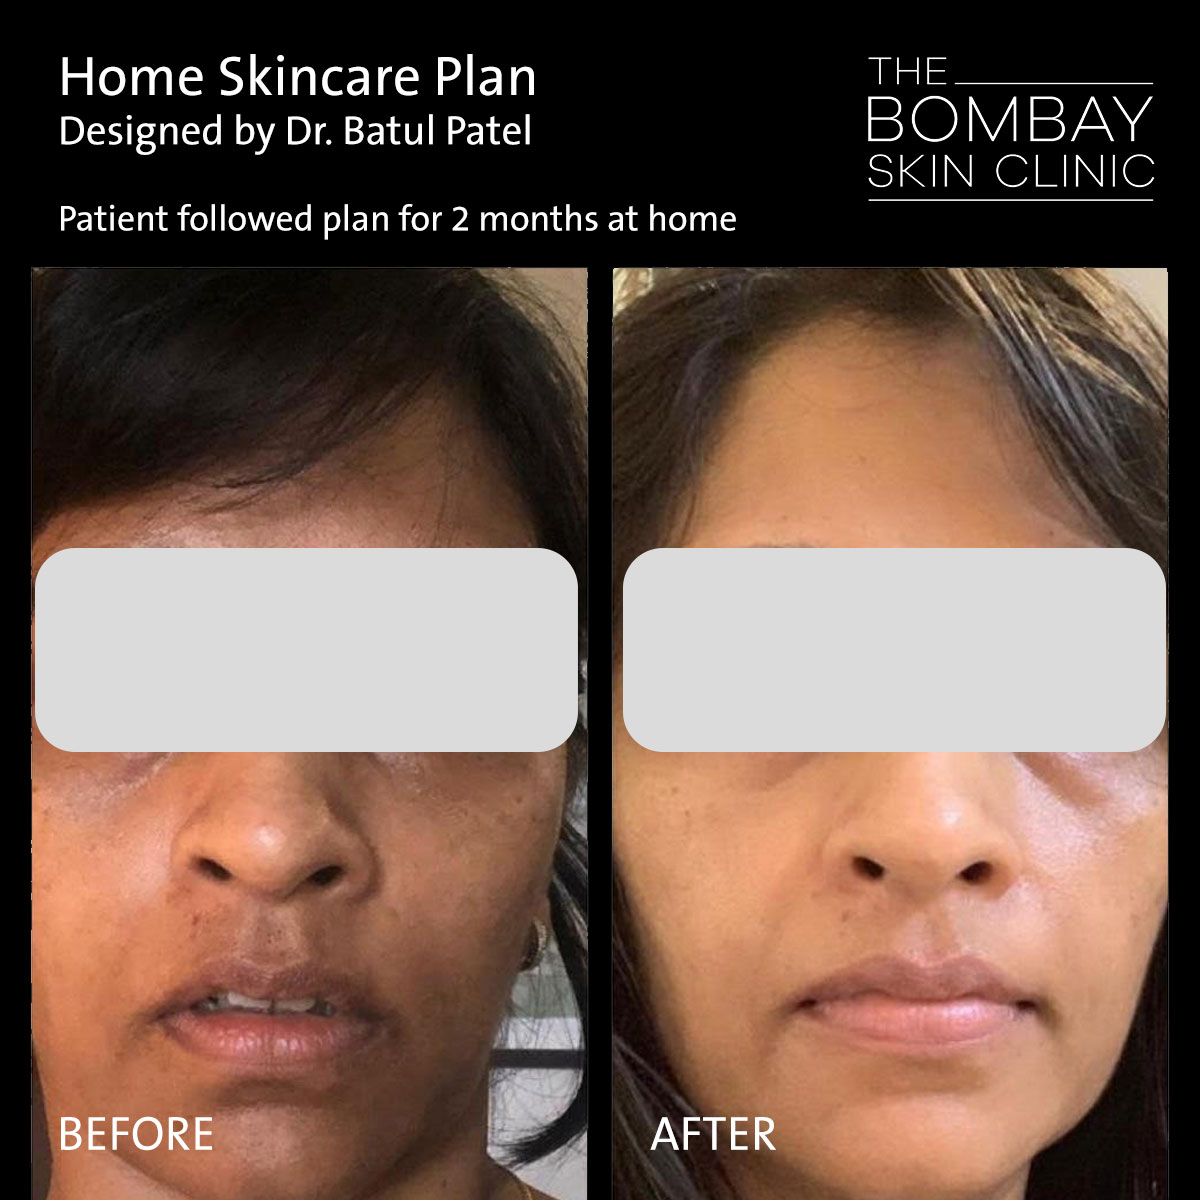 Before After Treatment Skin & Hair Treatment Photos | Dr. Batul Patel